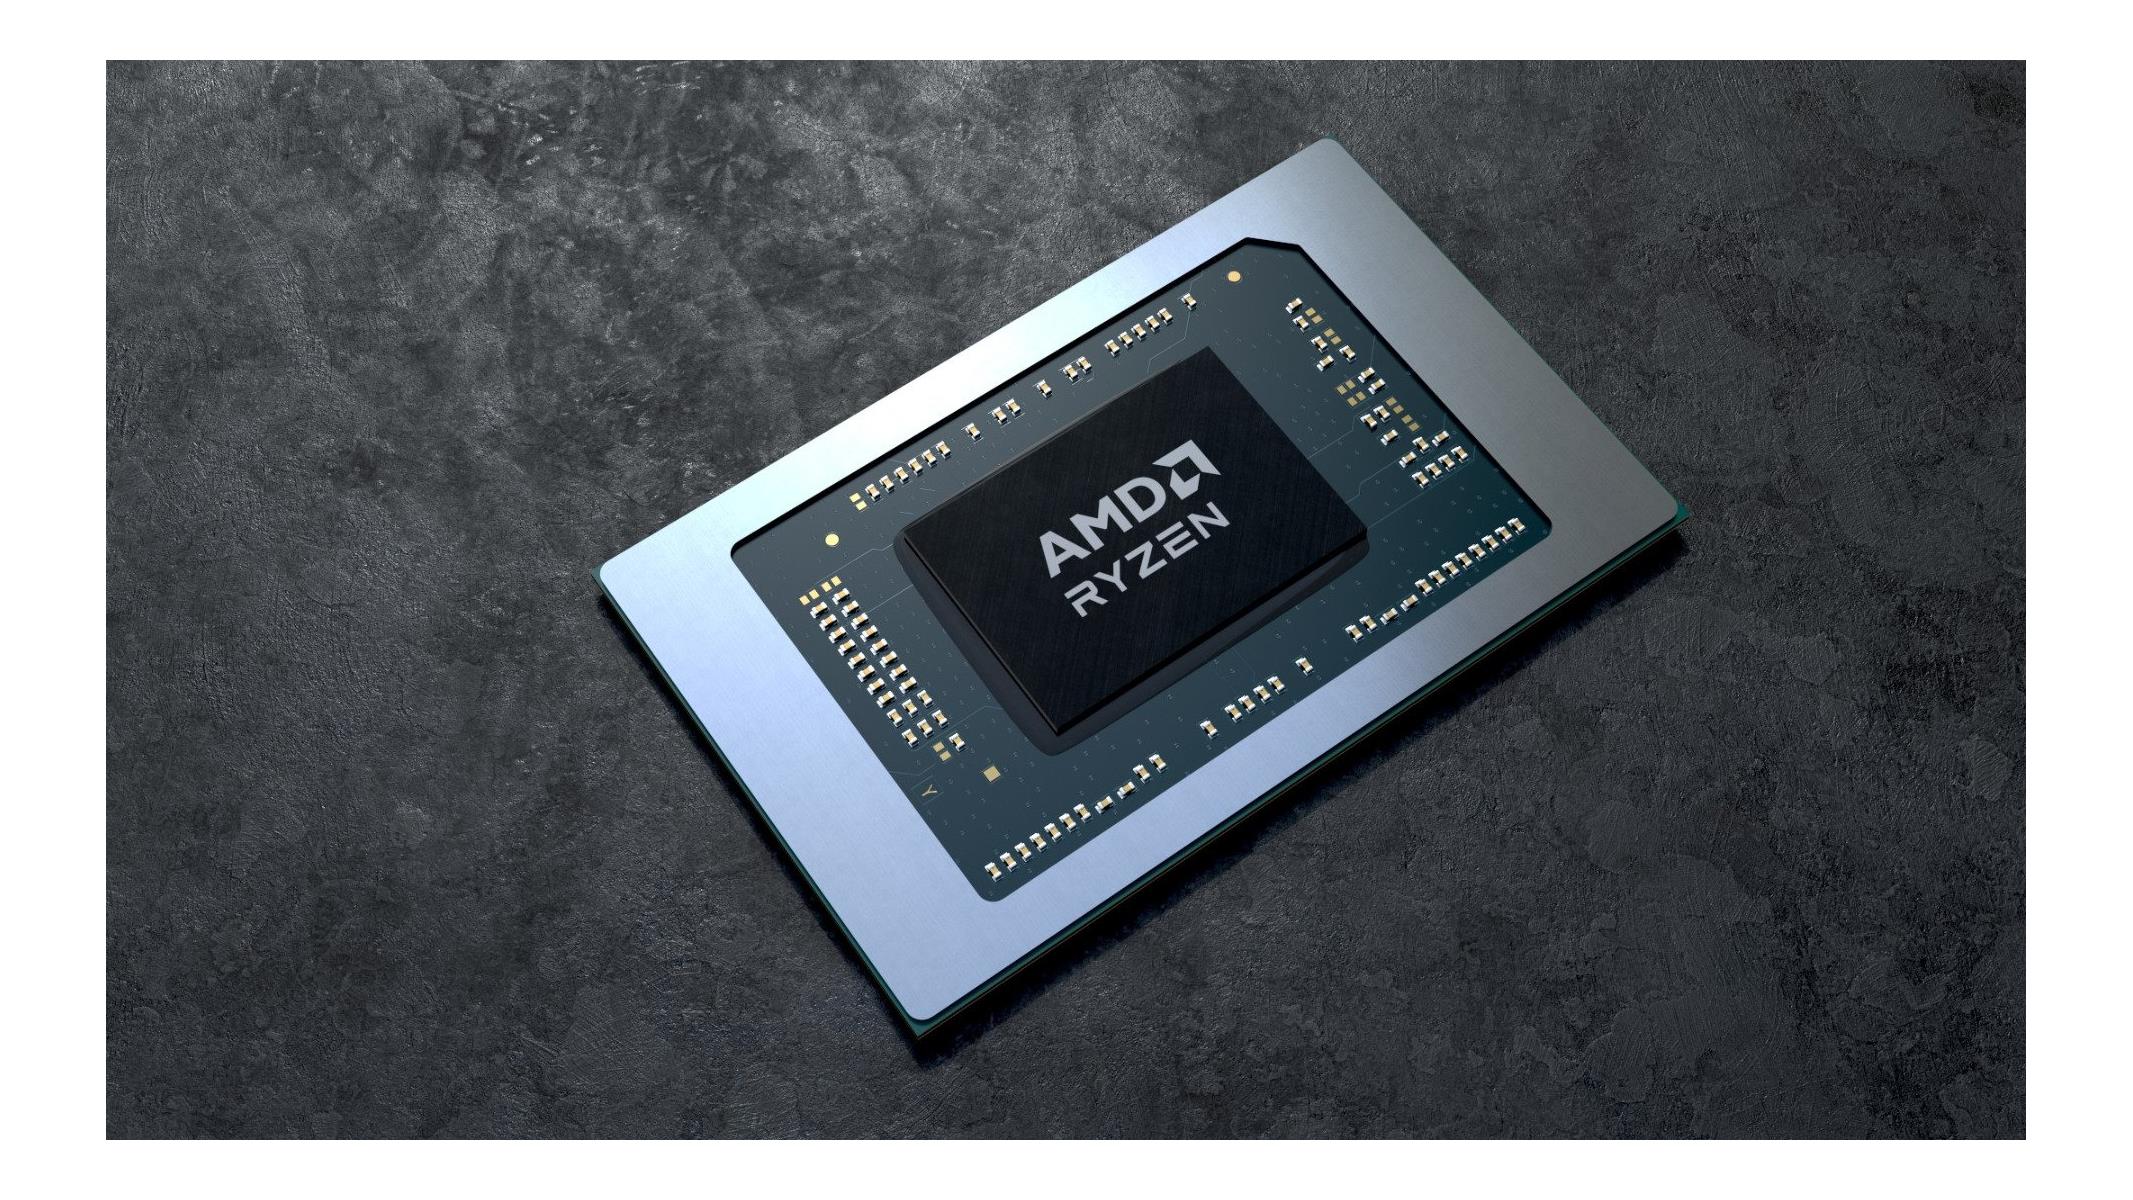 AMD's new Ryzen 8040 laptop chips look a lot like the Ryzen 7040 CPUs